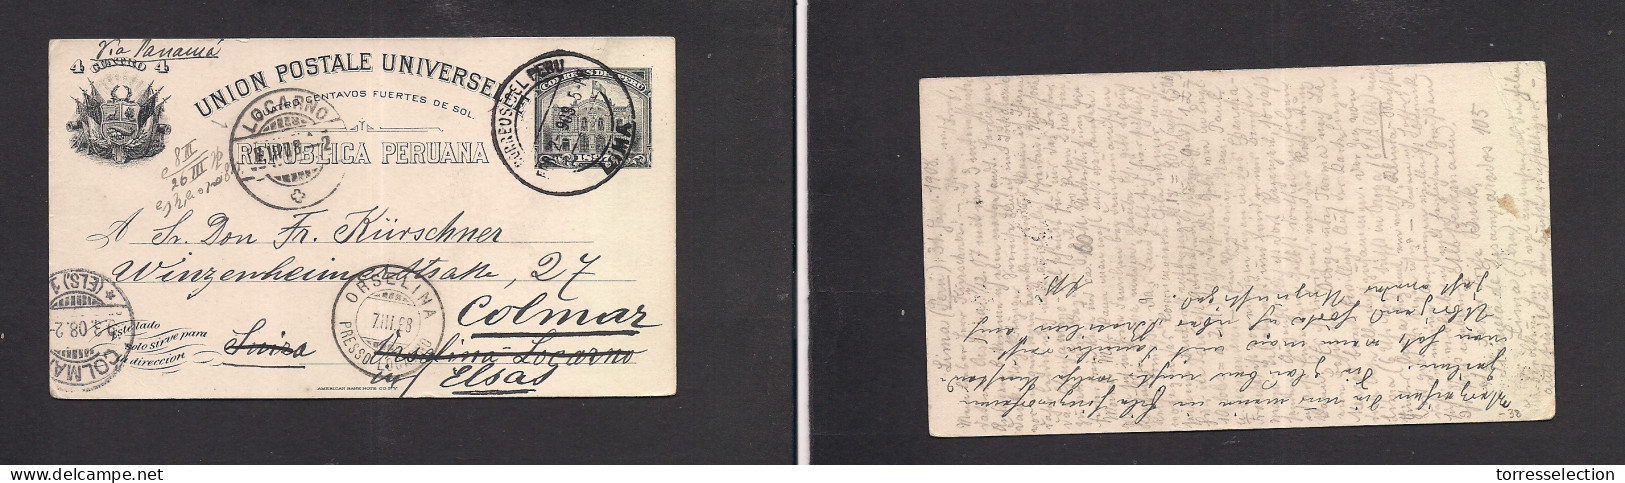 PERU. 1908 (31 Jan) Lima - Colmar, Switzerland (7 March) 4c Black Stat Card. Fine Used Via Panama. - Peru